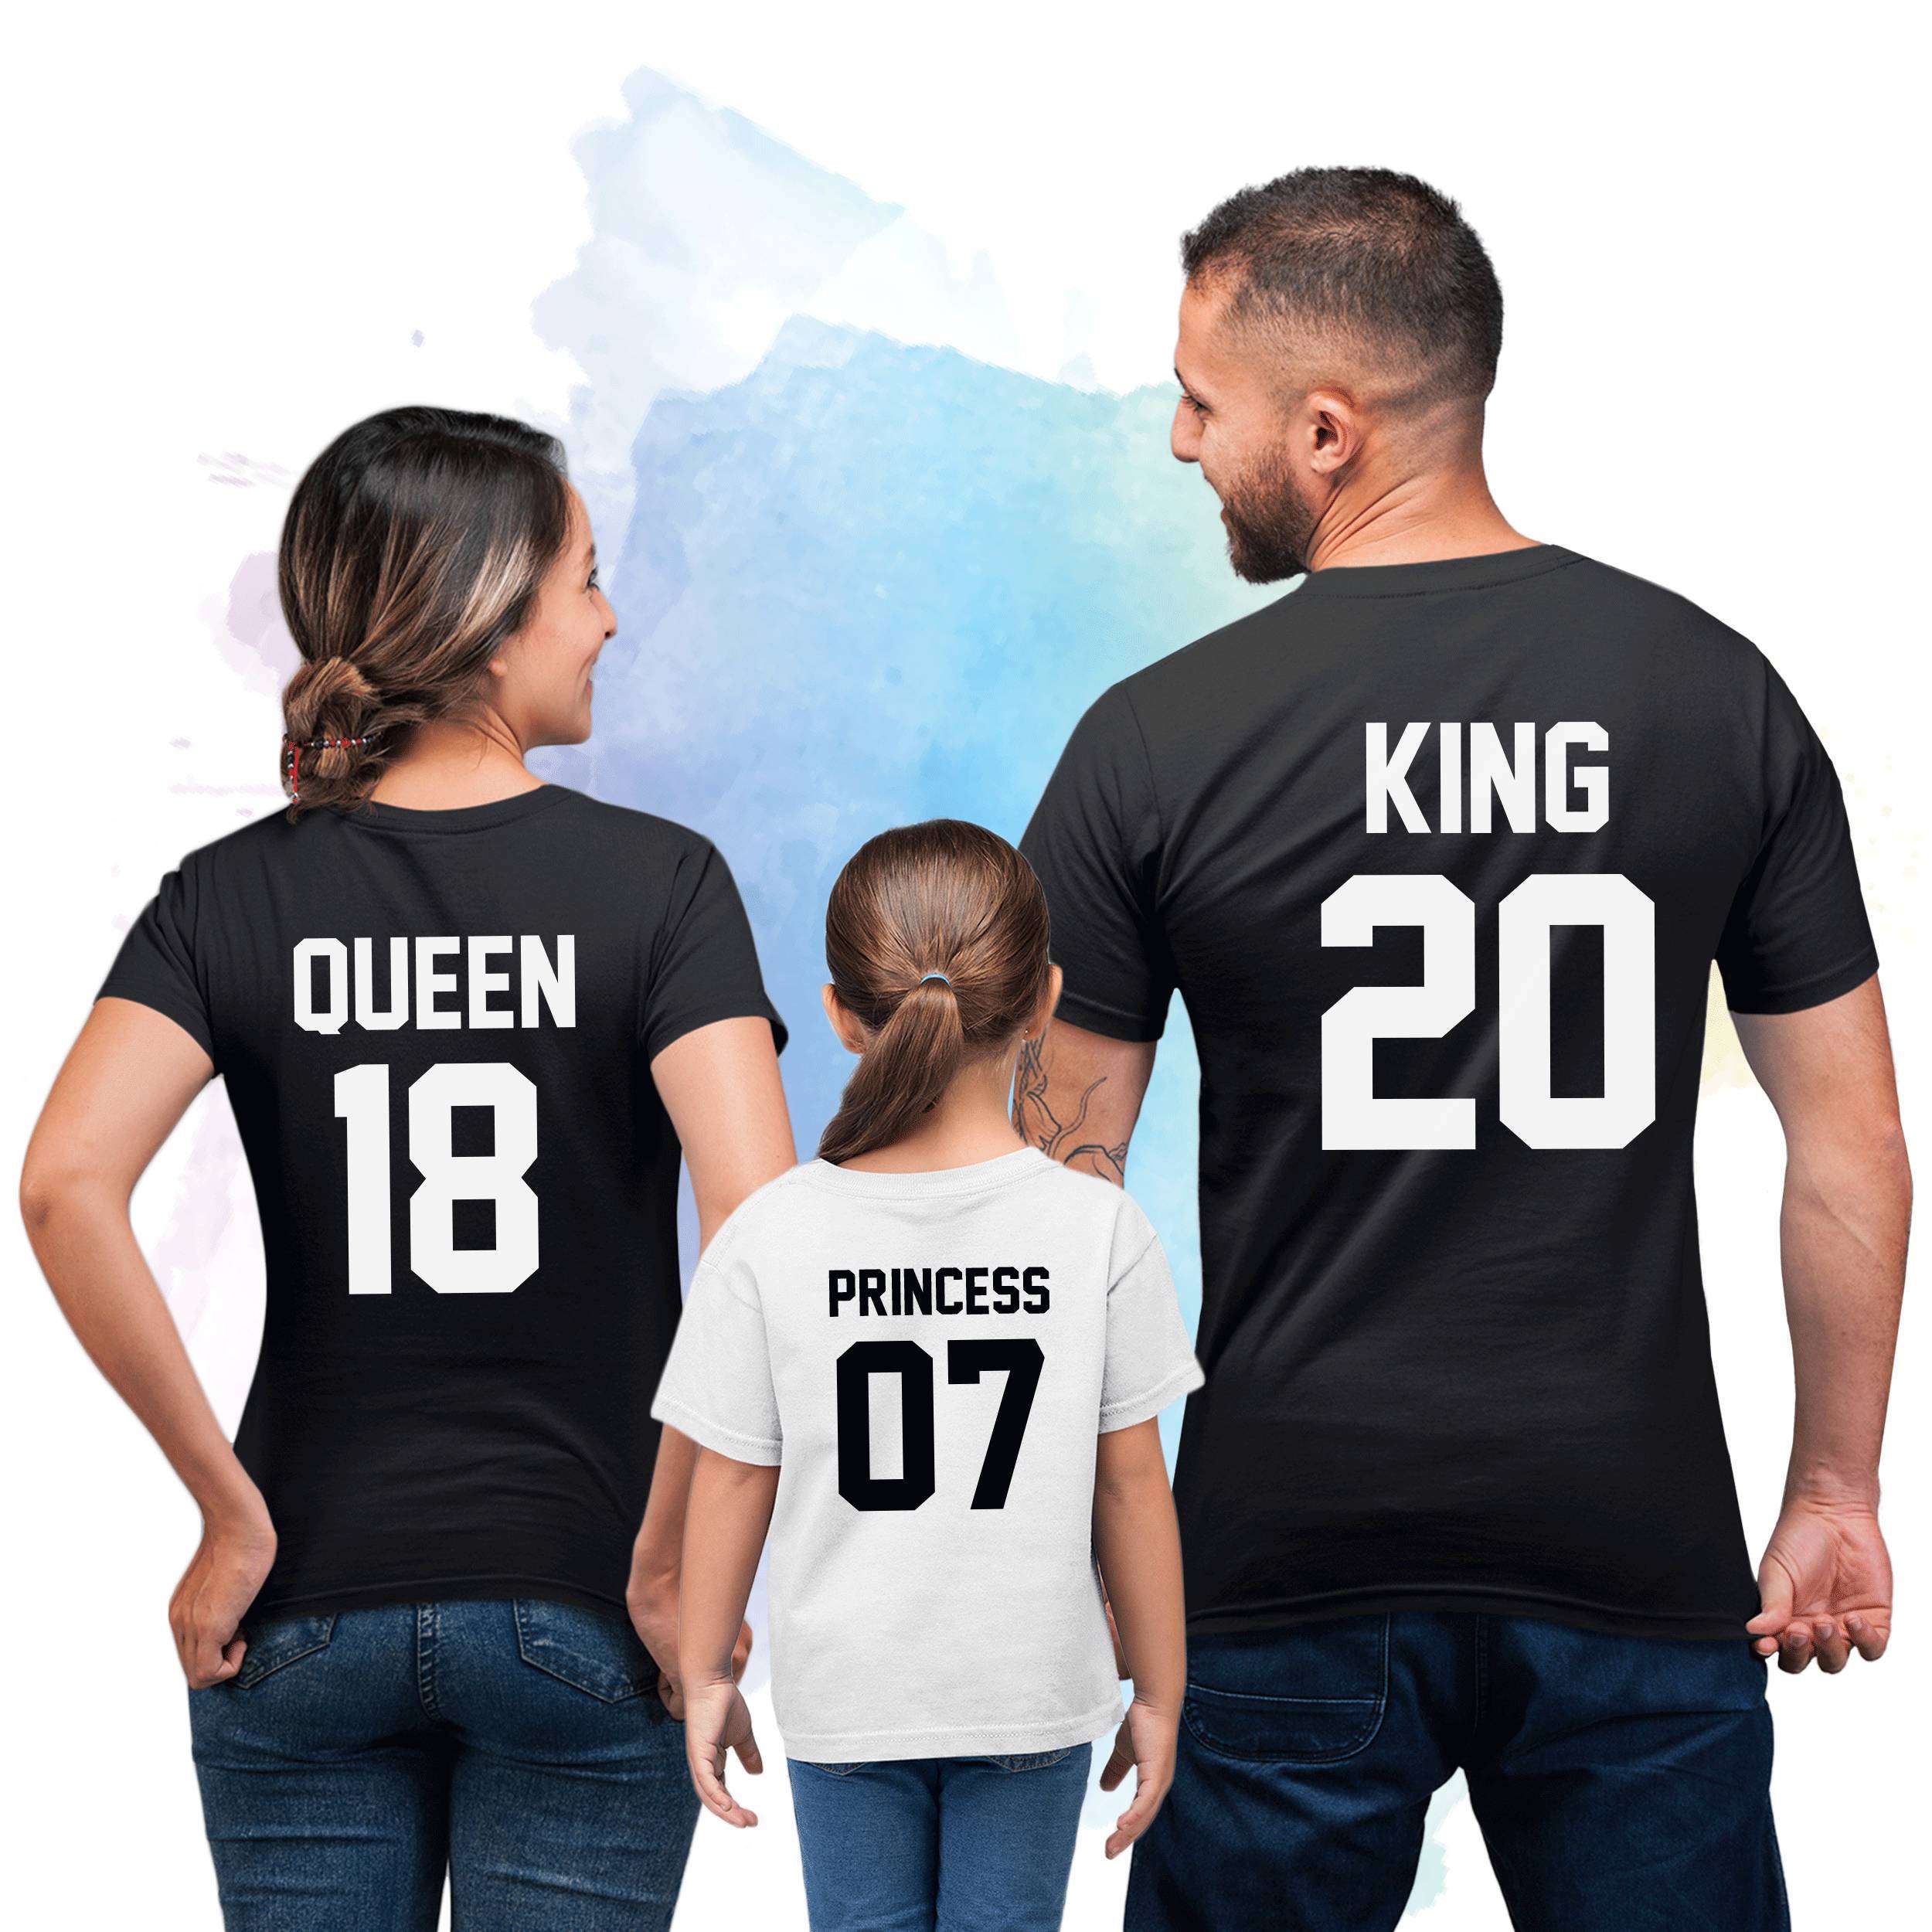 Topnicegifts Royal King & Queen Shirts - Topnicegifts